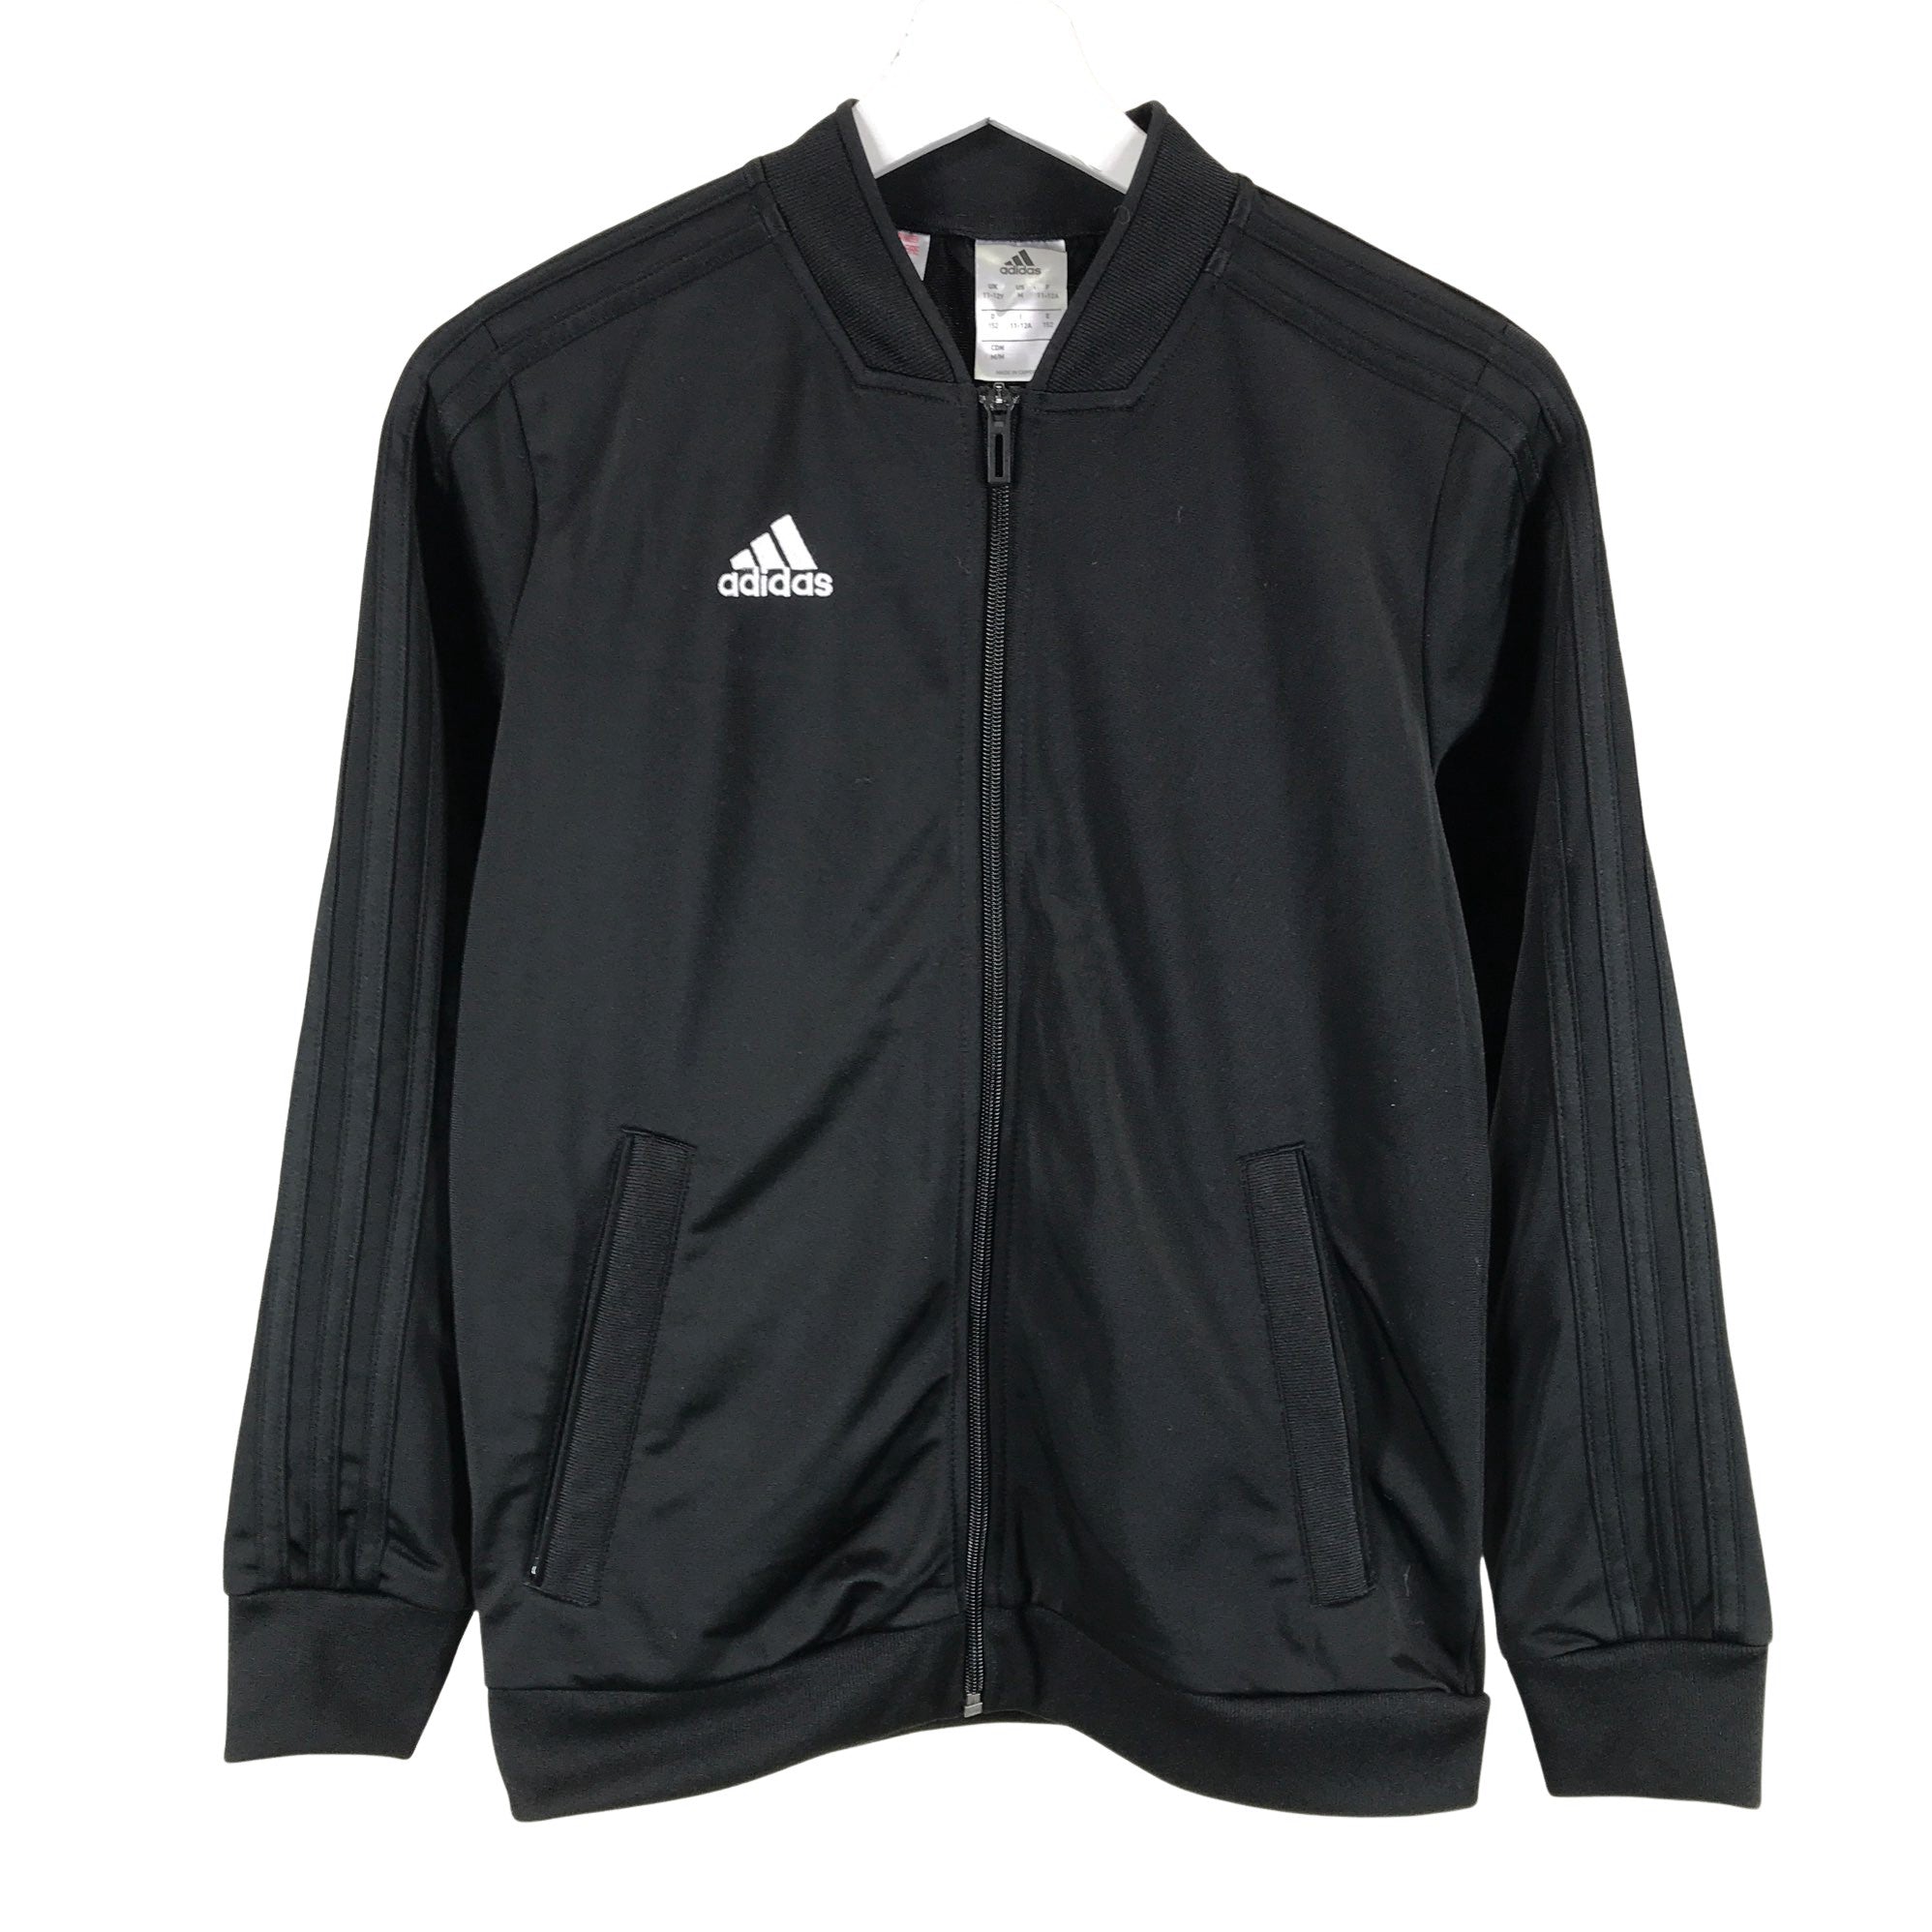 arrepentirse demostración mantequilla Unisex Adidas Track jacket, size 146 - 152 (Black) | Emmy